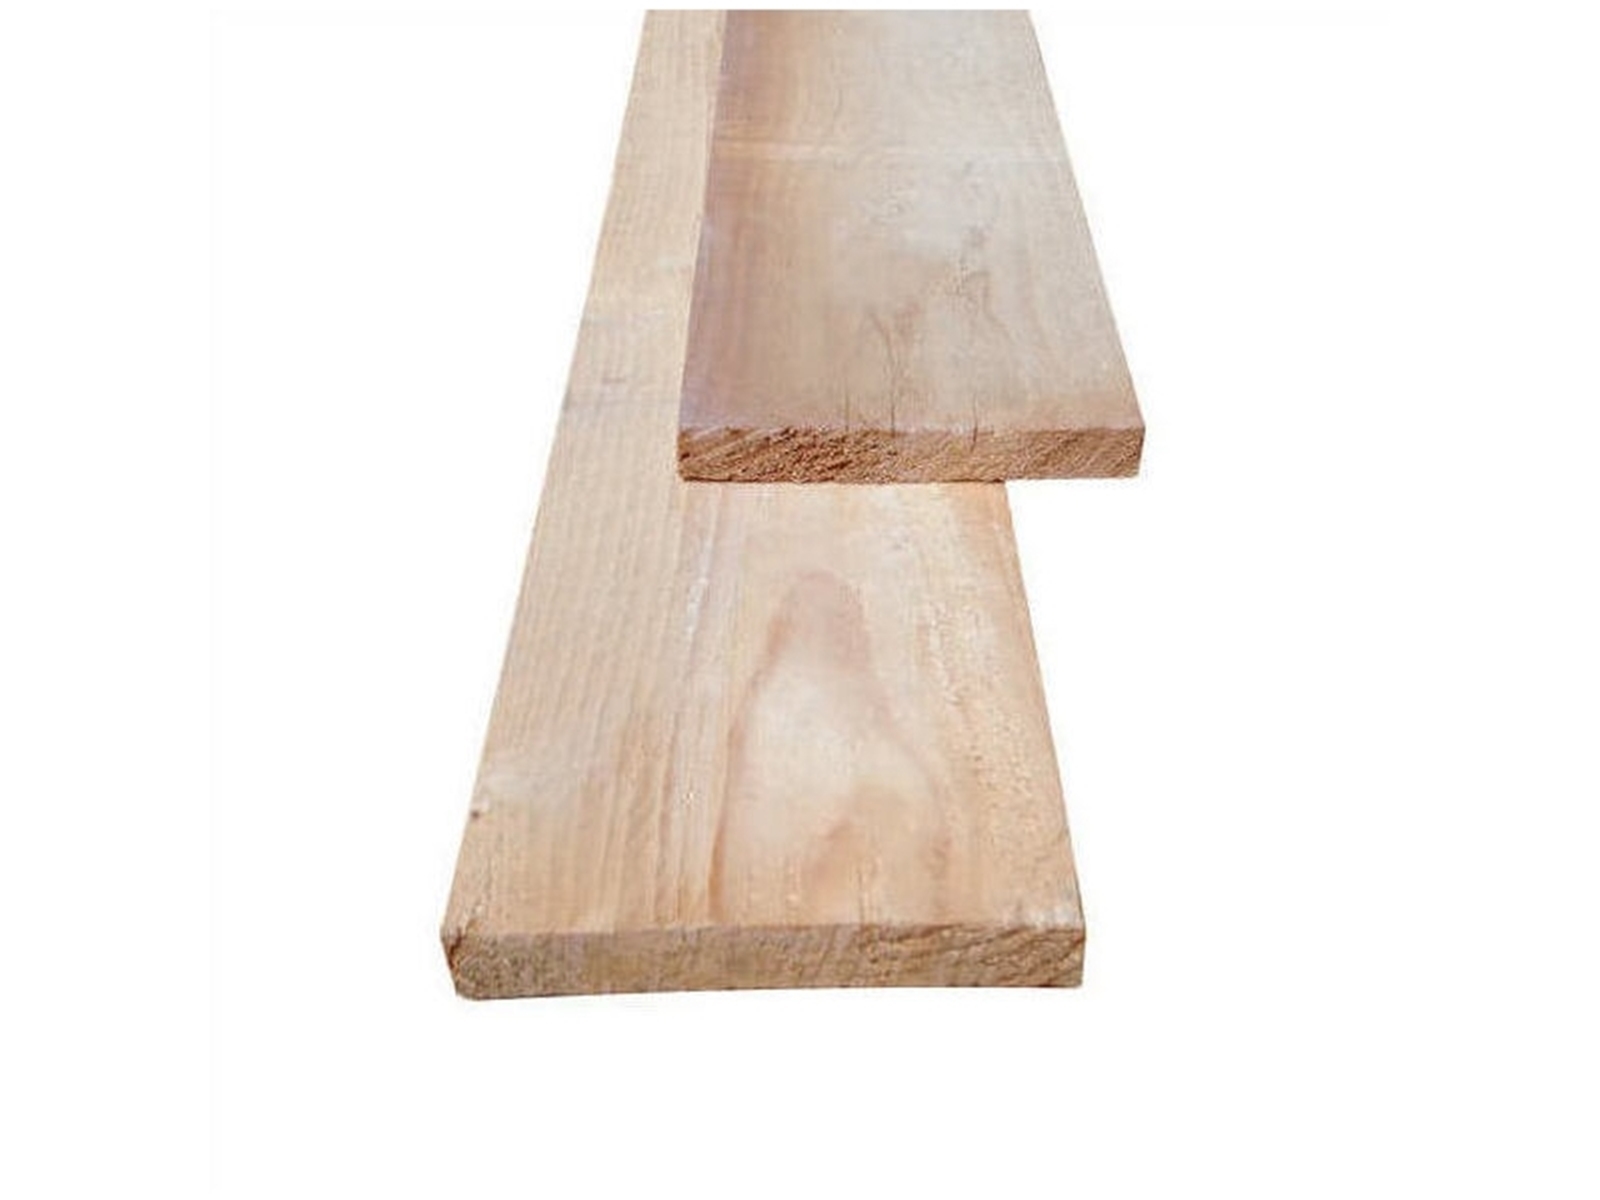 ME-vuren houten plank (bouwplank), ±23x180mm, fijnbezaagd, onbehandeld, 5000mm